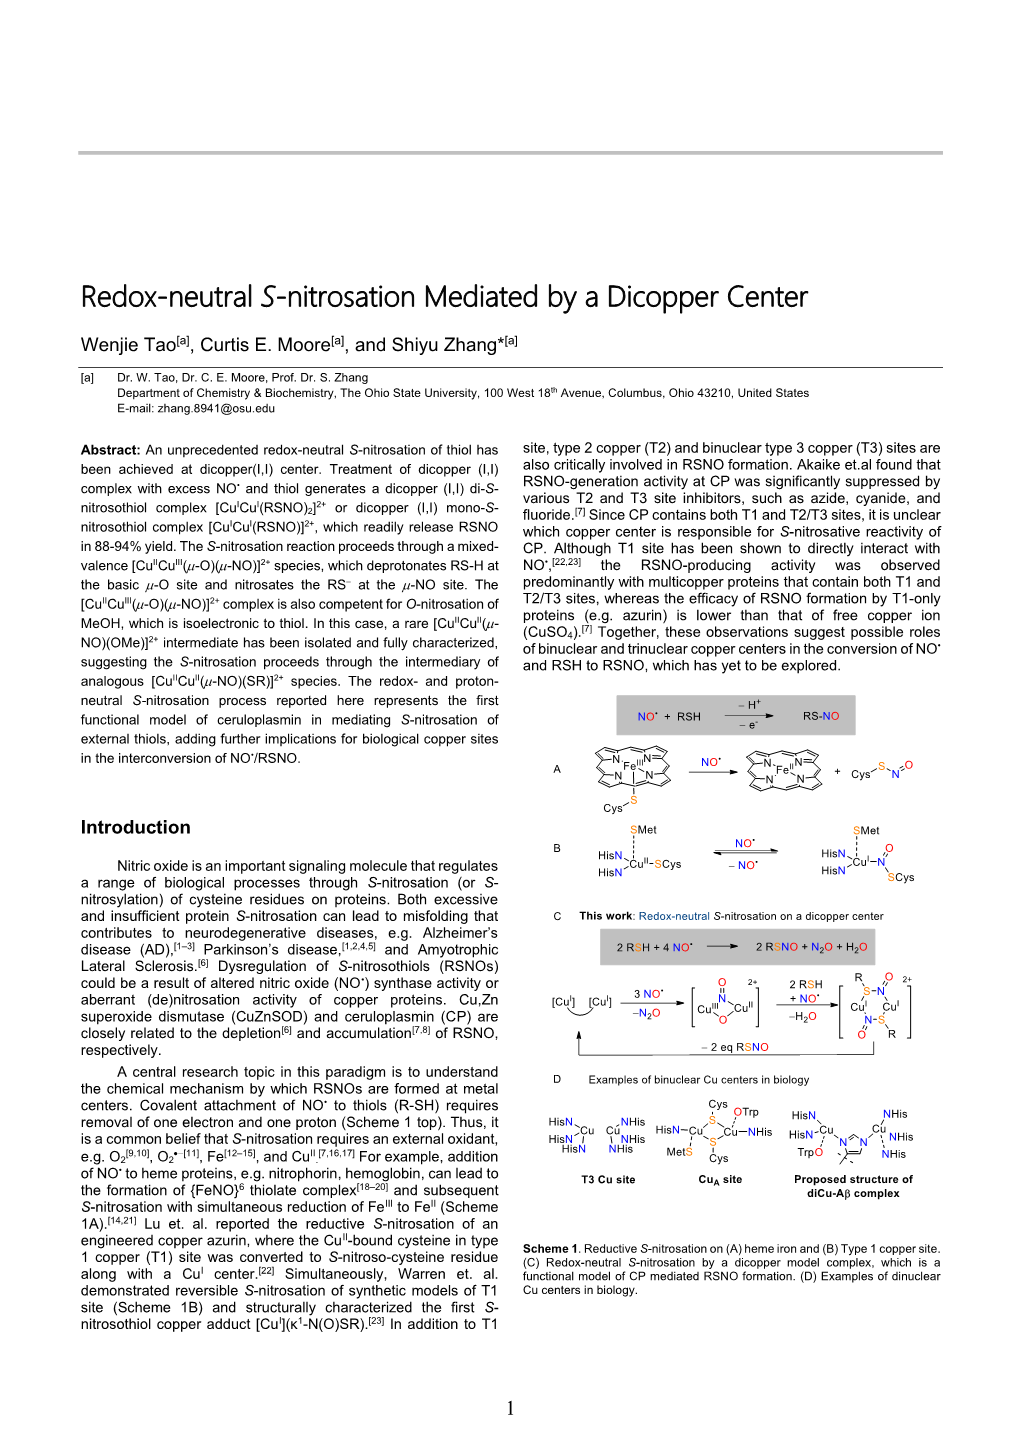 Redox-Neutral S-Nitrosation Mediated by a Dicopper Center